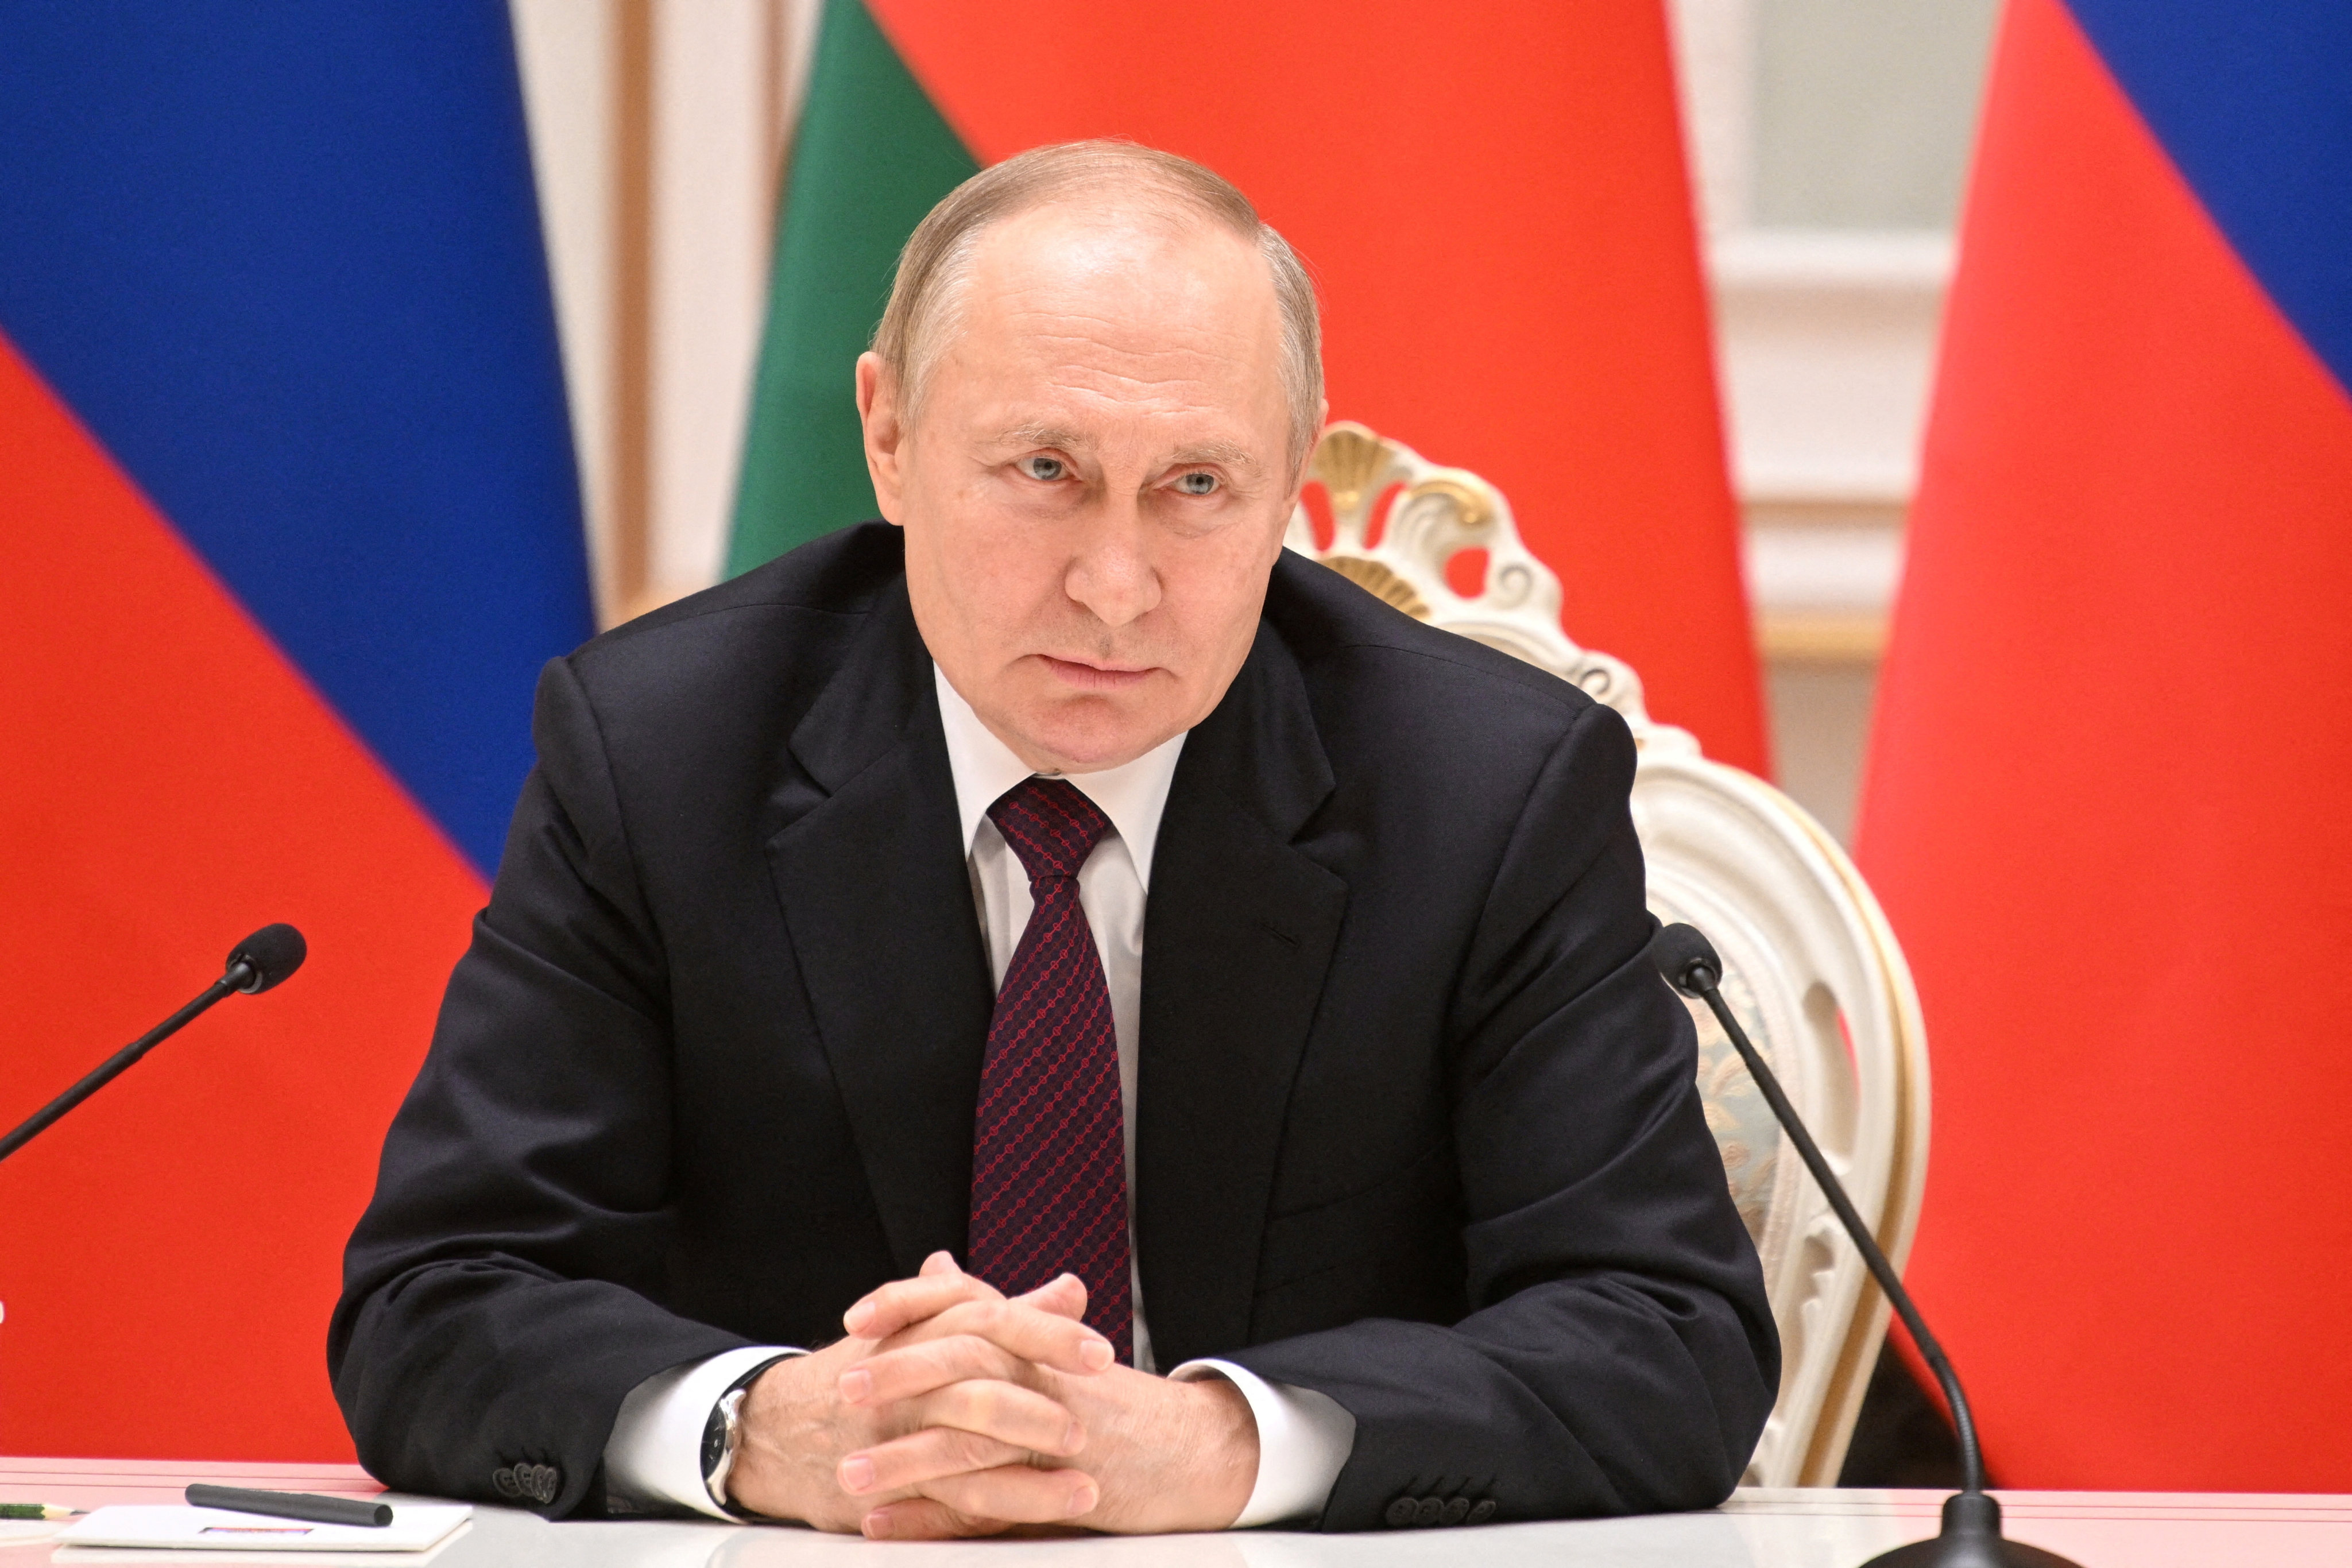 Russian President Vladimir Putin during a visit Monday to Minsk, Belarus. Photo: Reuters